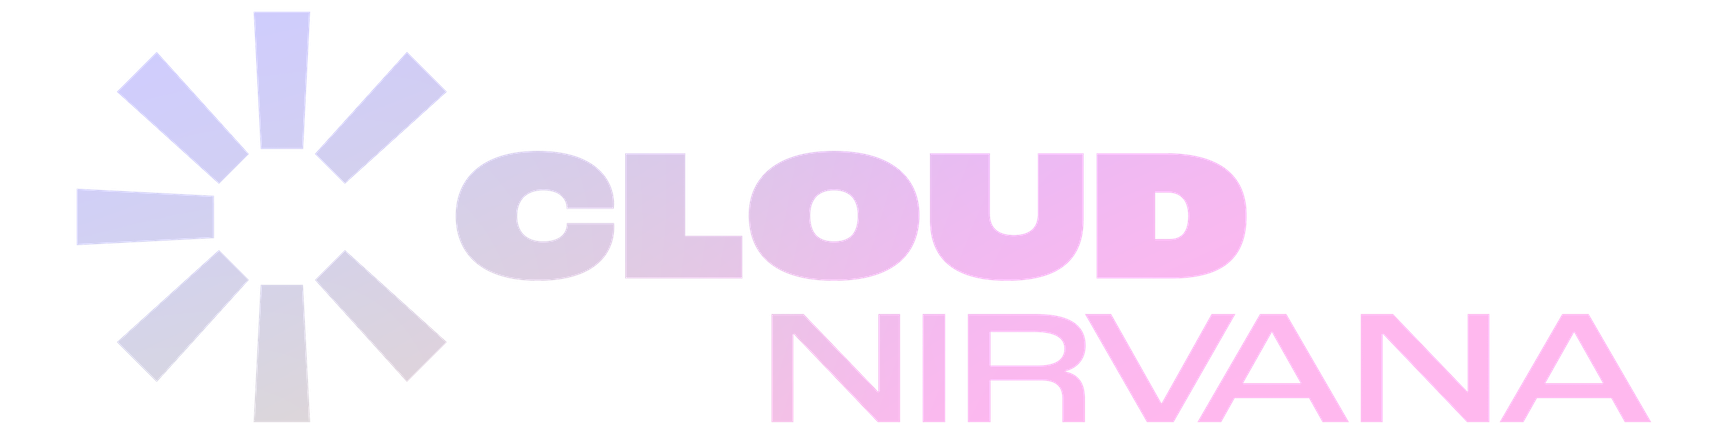 Cloud Nirvana Zoco Design Logo